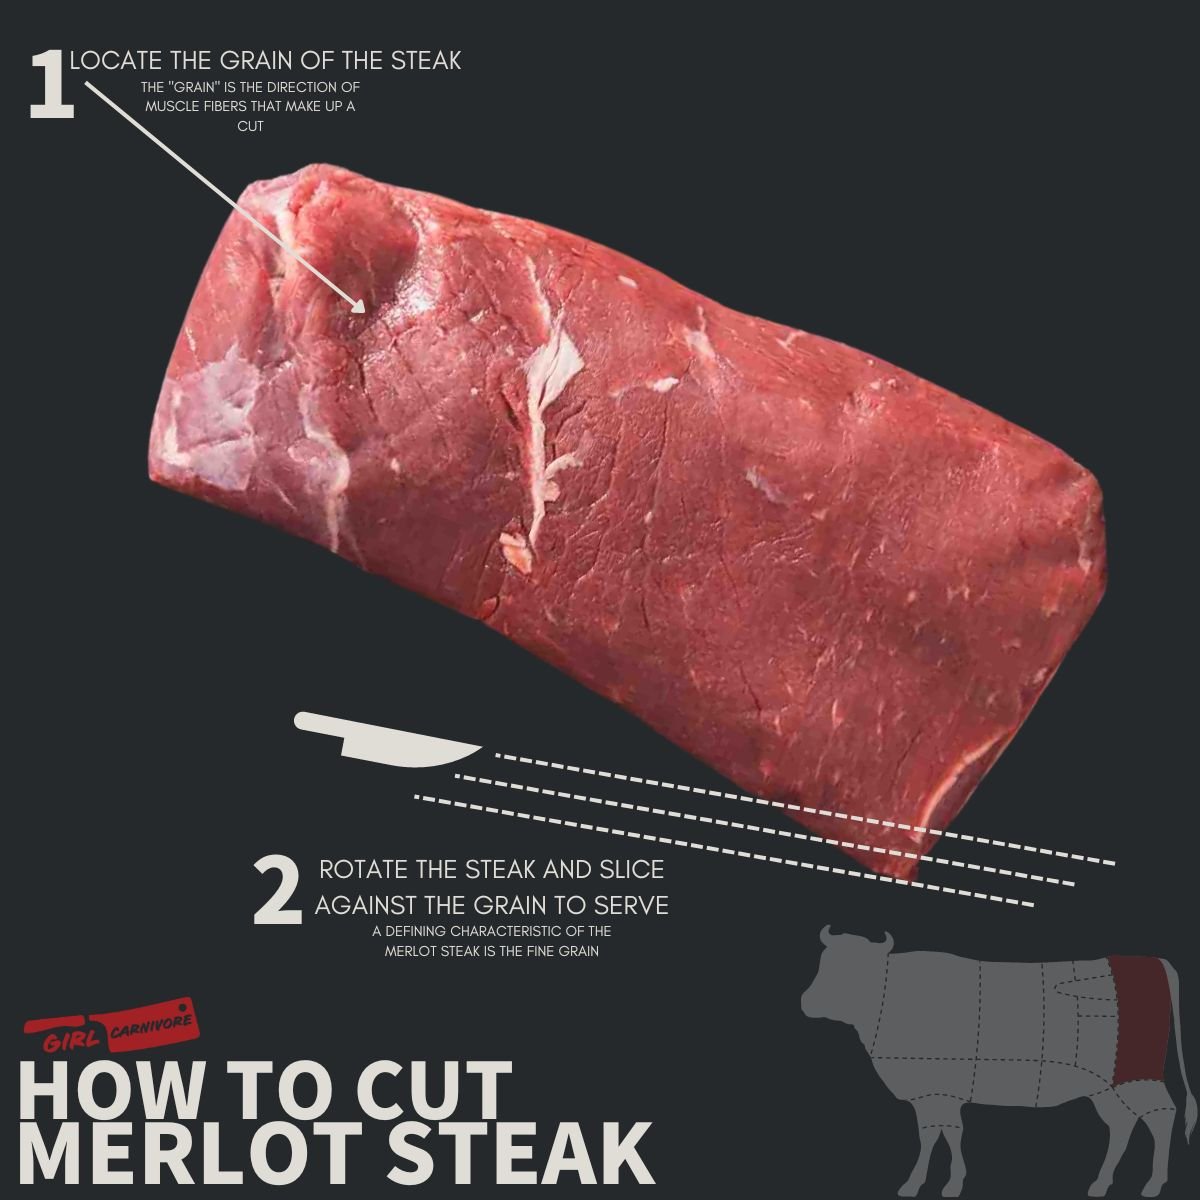 Diagram showing how to slice a merlot steak against the grain. 